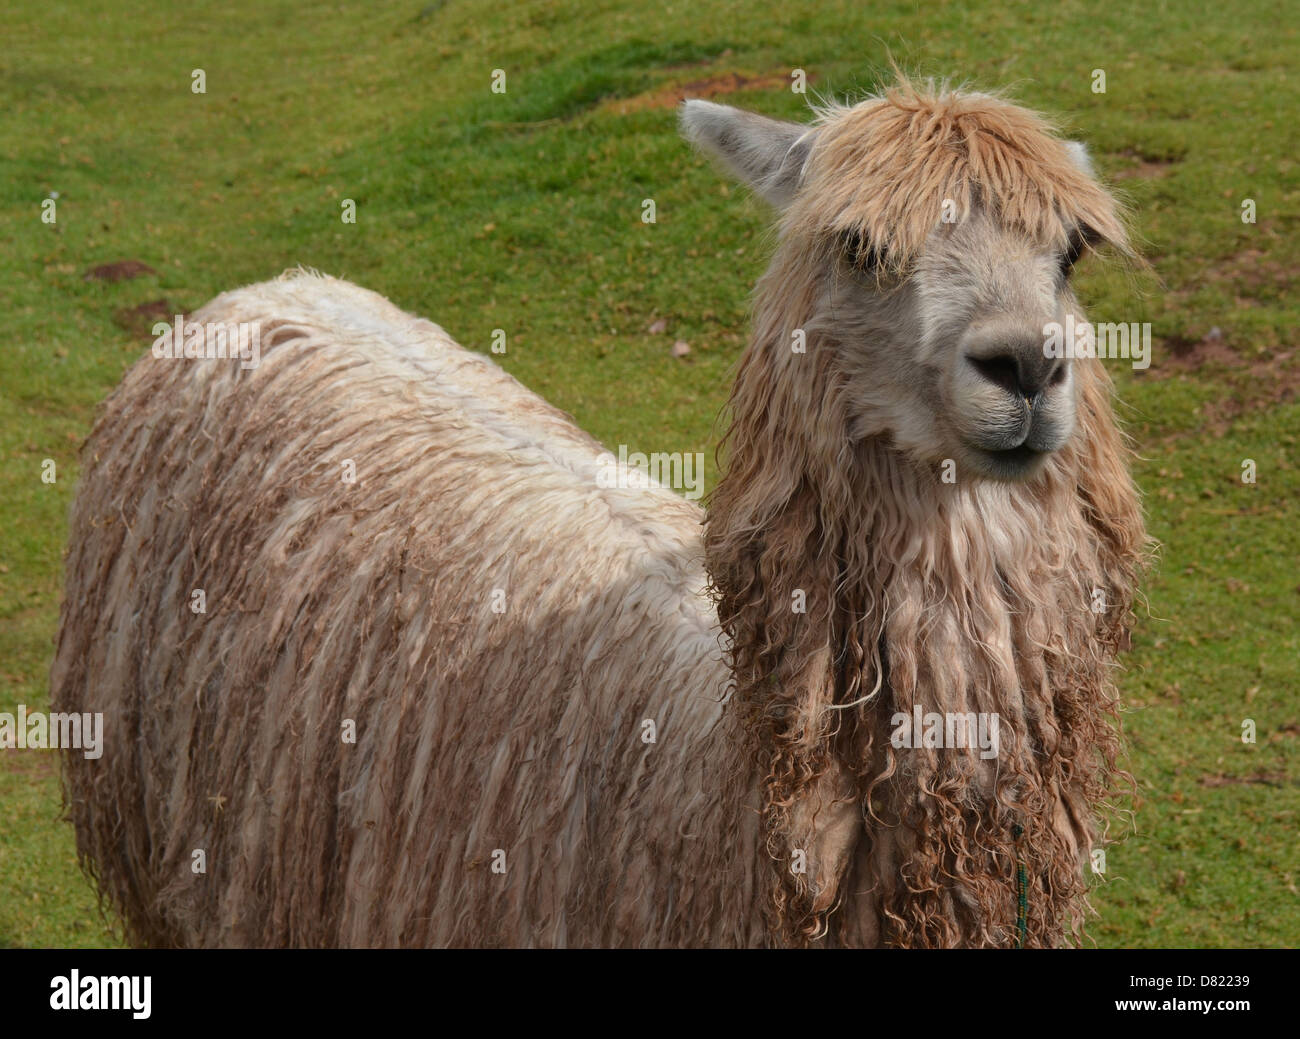 a long-haired Alpaca, near Cuzco, Peru Stock Photo